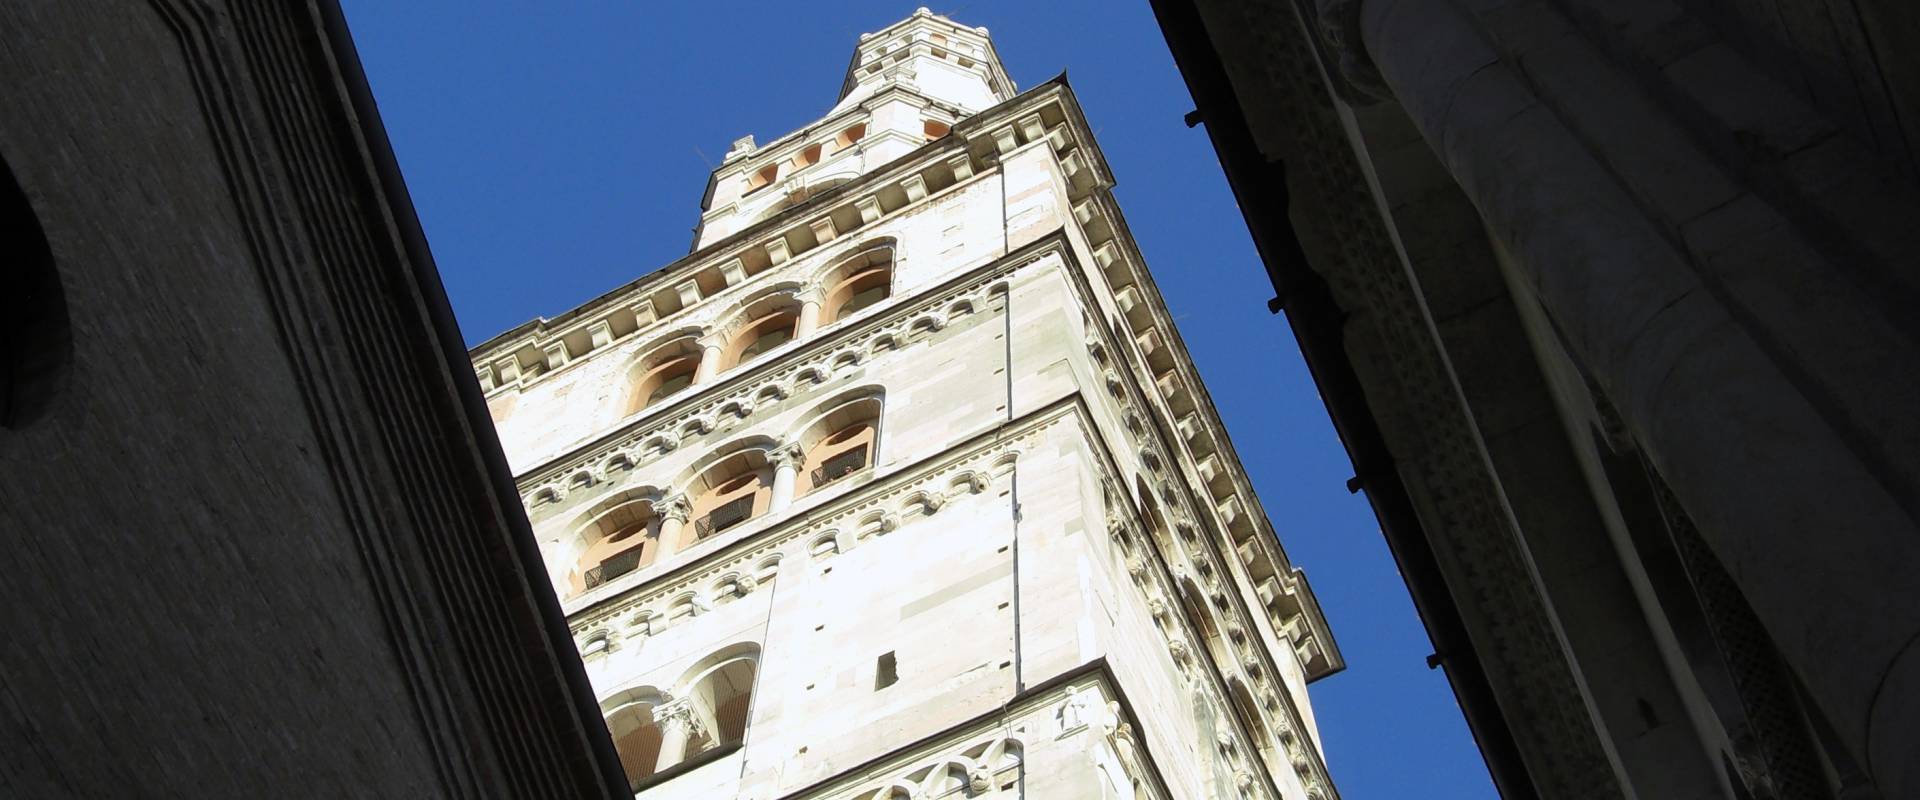 Torre Ghirlandina di Modena dal basso 6 photo by Matteolel